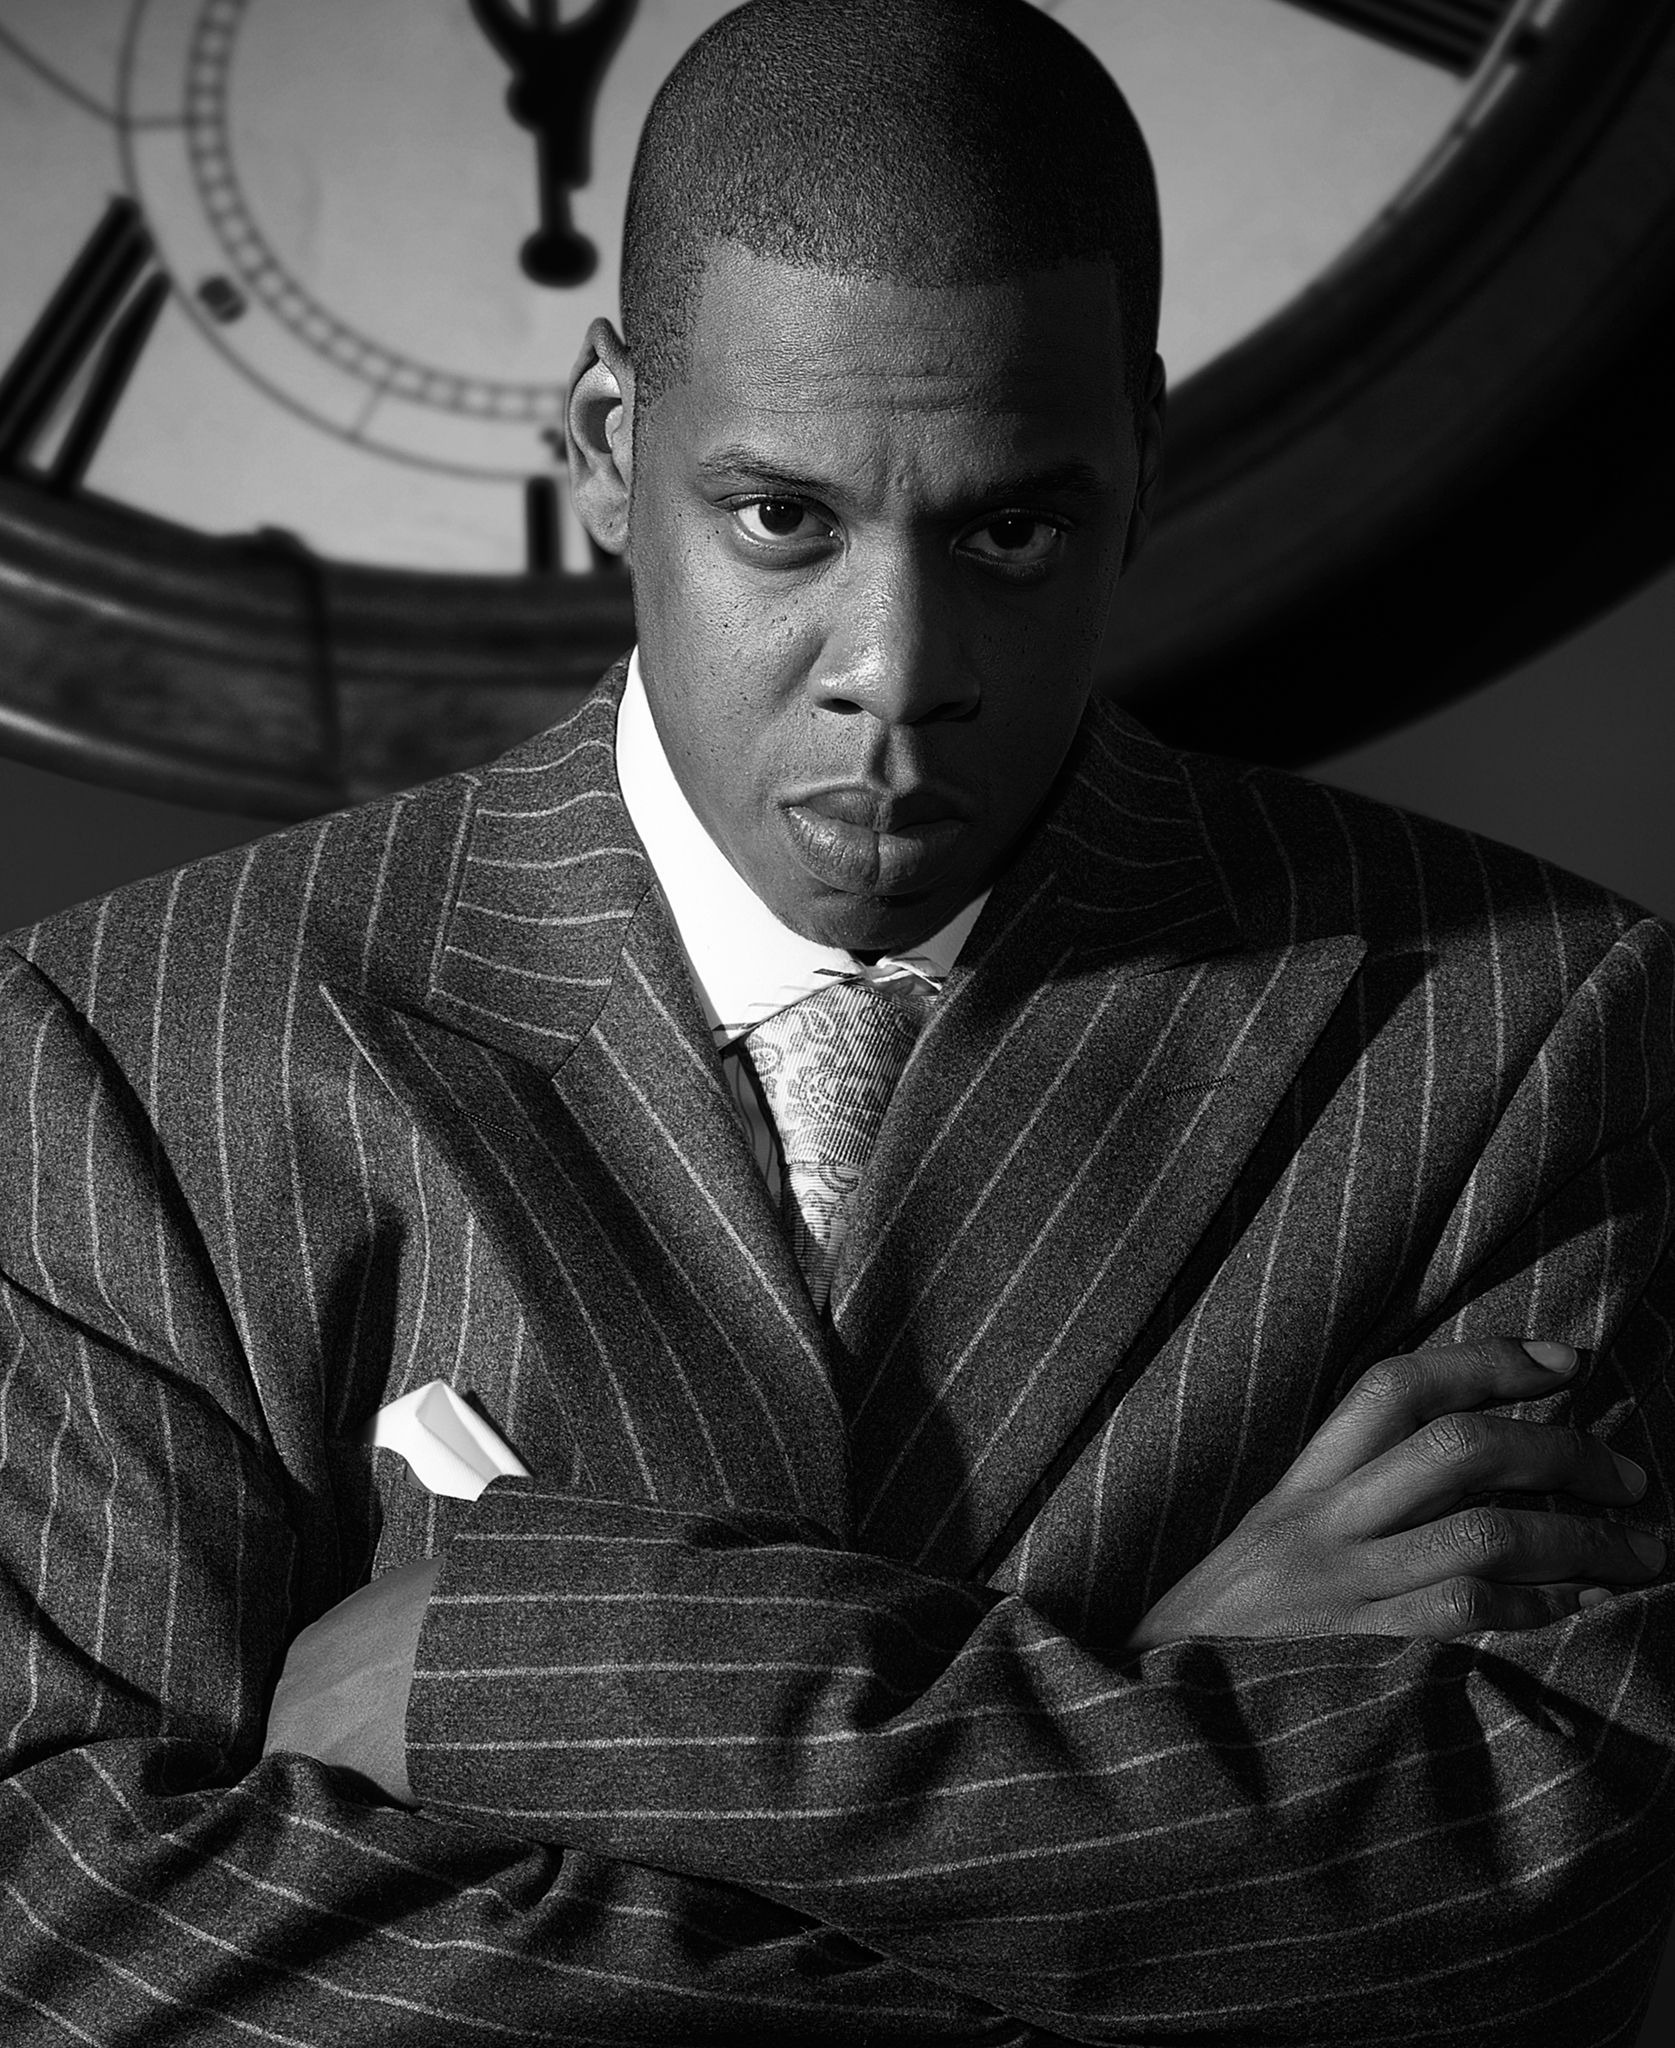 Jay Z in pintstripe suit shot in black and white